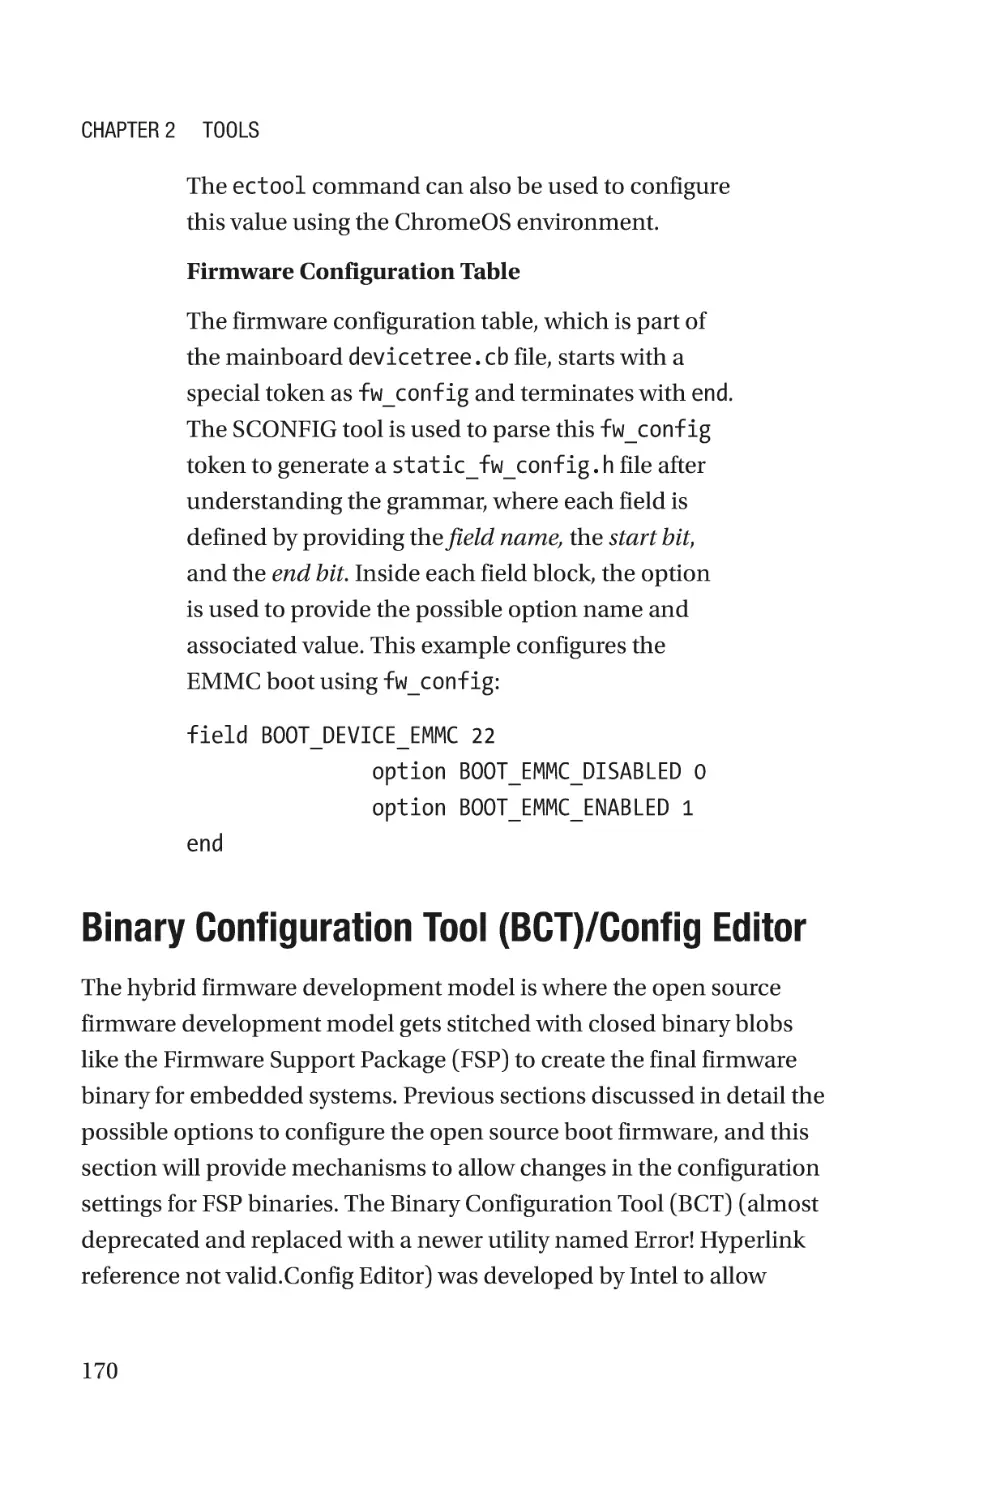 Binary Configuration Tool (BCT)/Config Editor